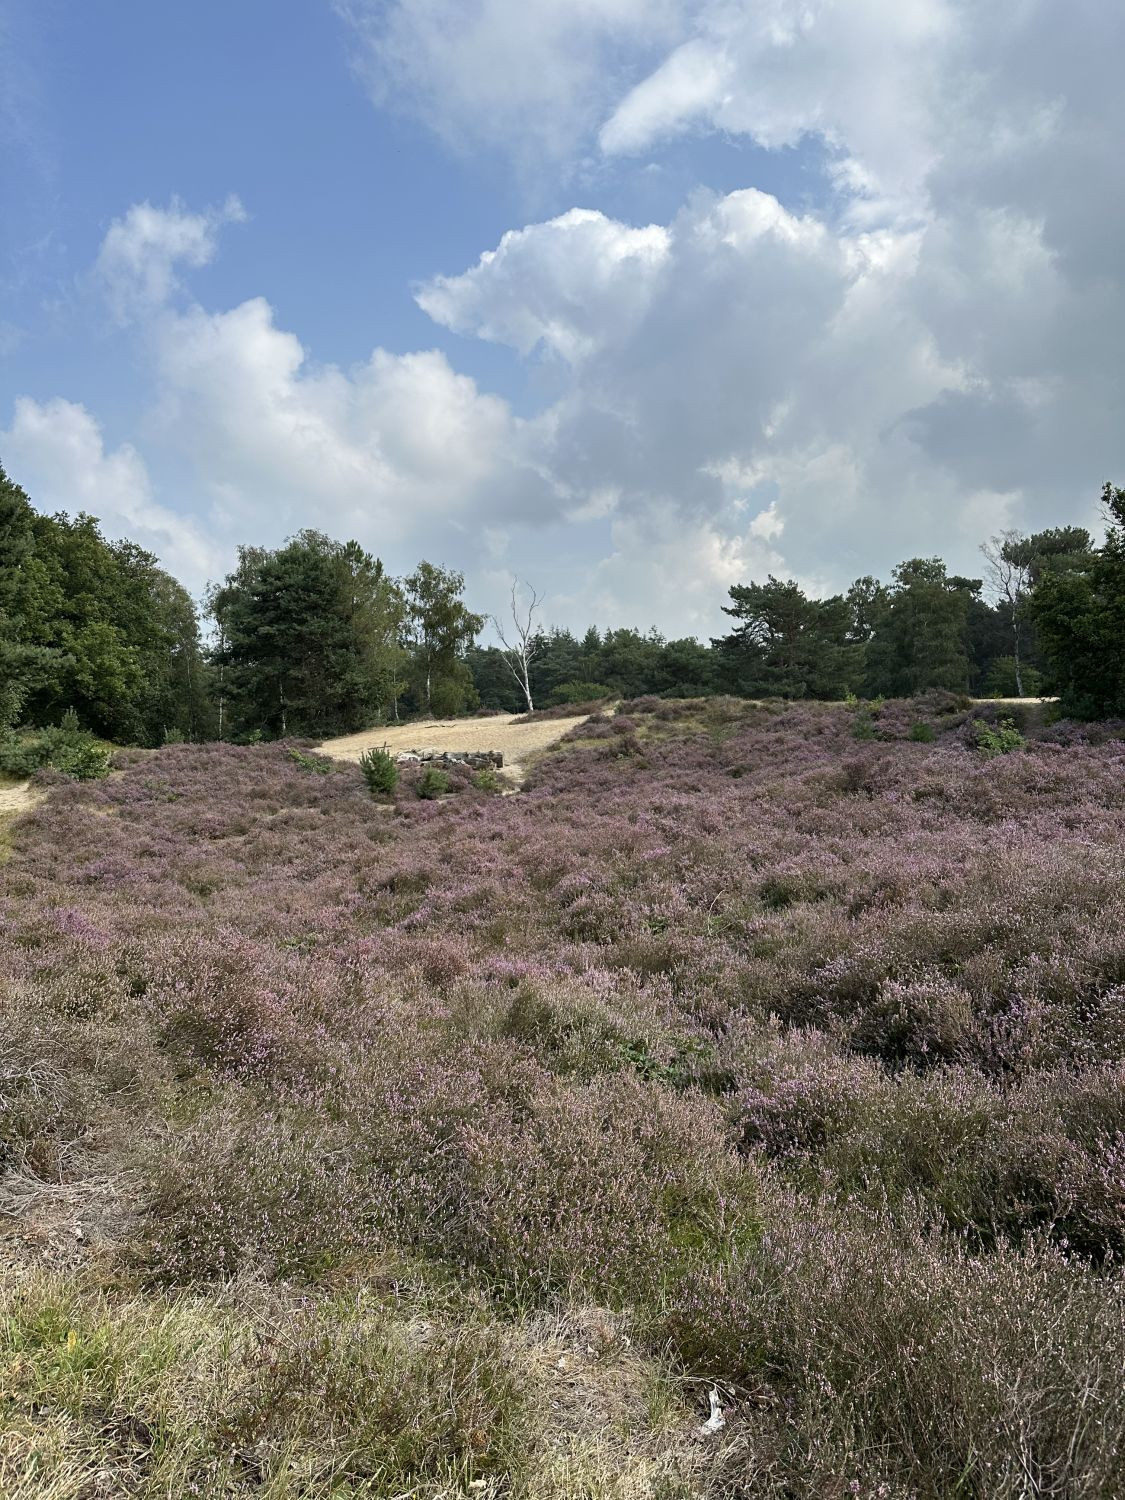 visit Brabant Heide